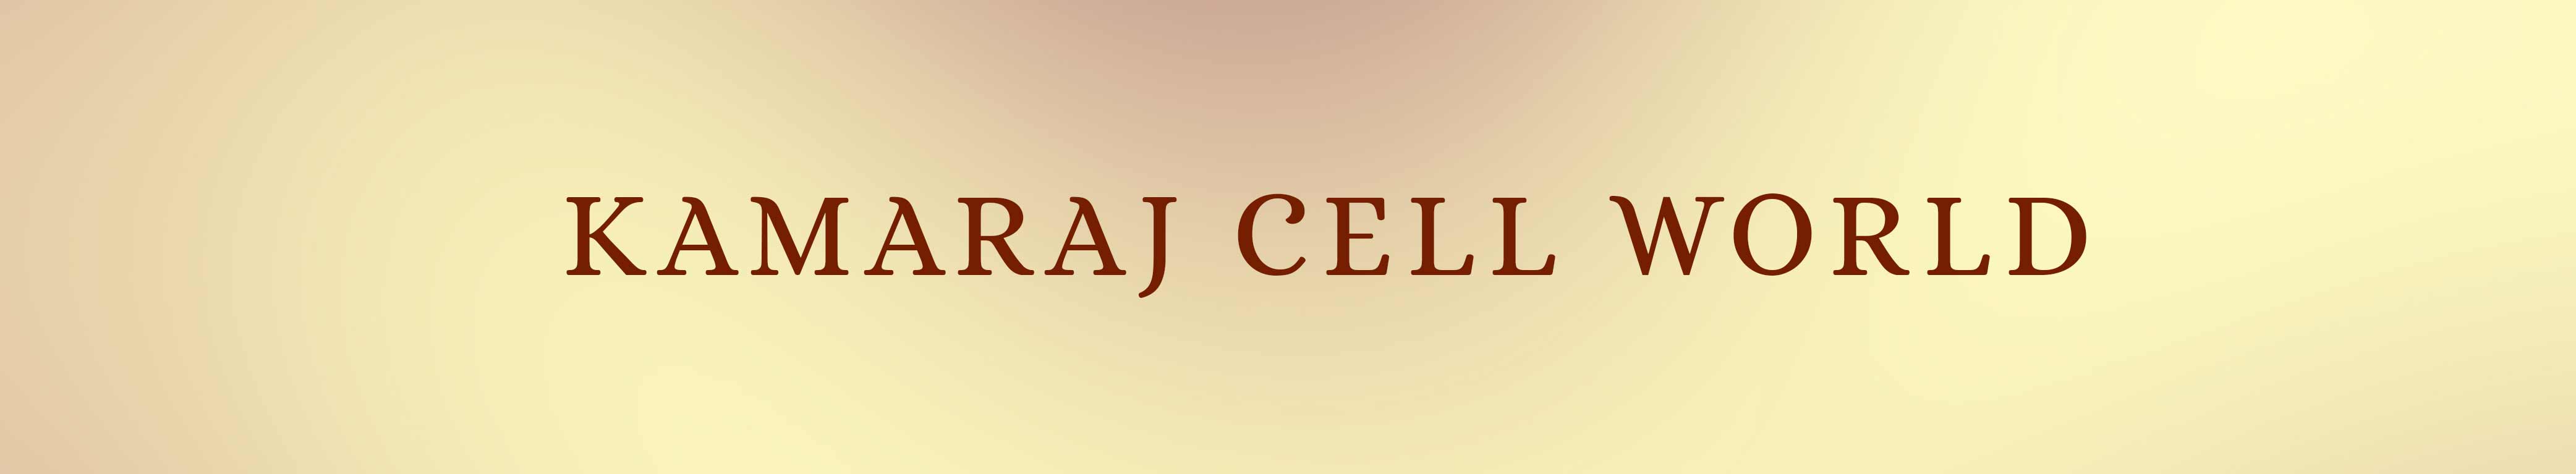 Kamaraj Cell World Banner Image